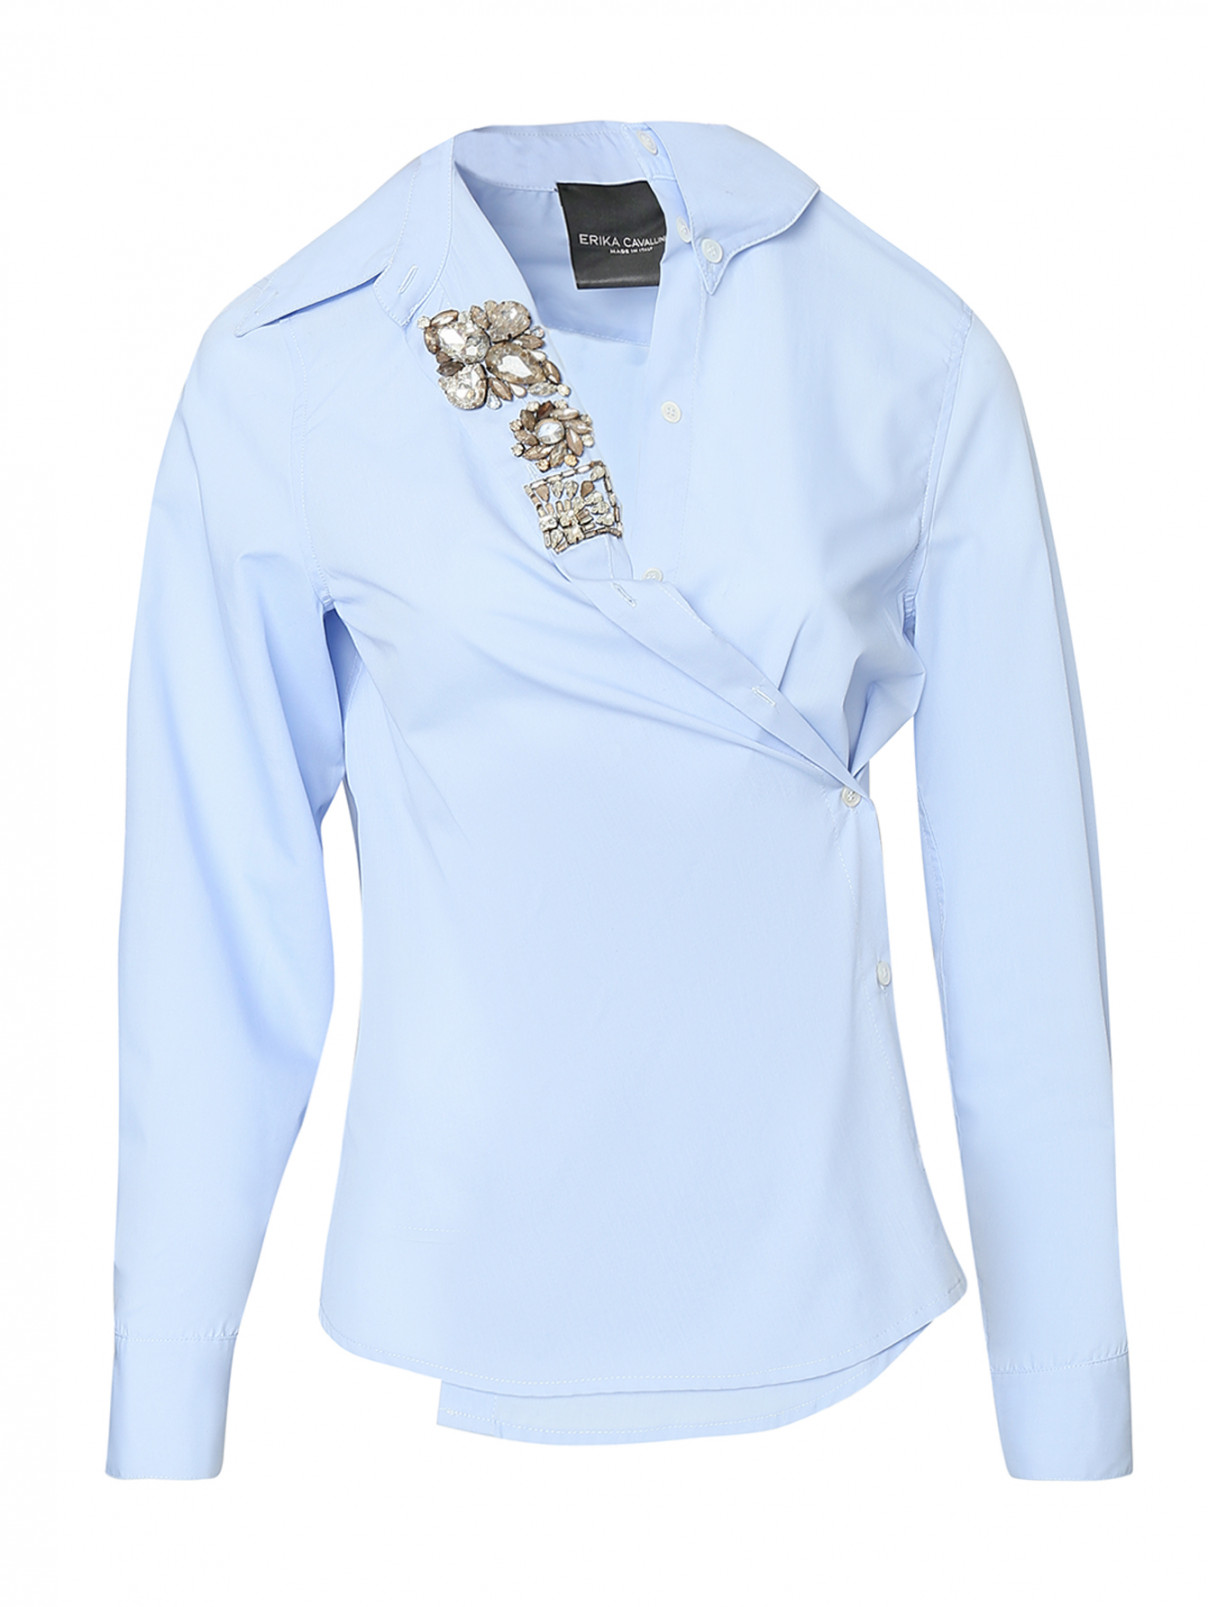 Блуза с декором стразами Erika Cavallini  –  Общий вид  – Цвет:  Синий